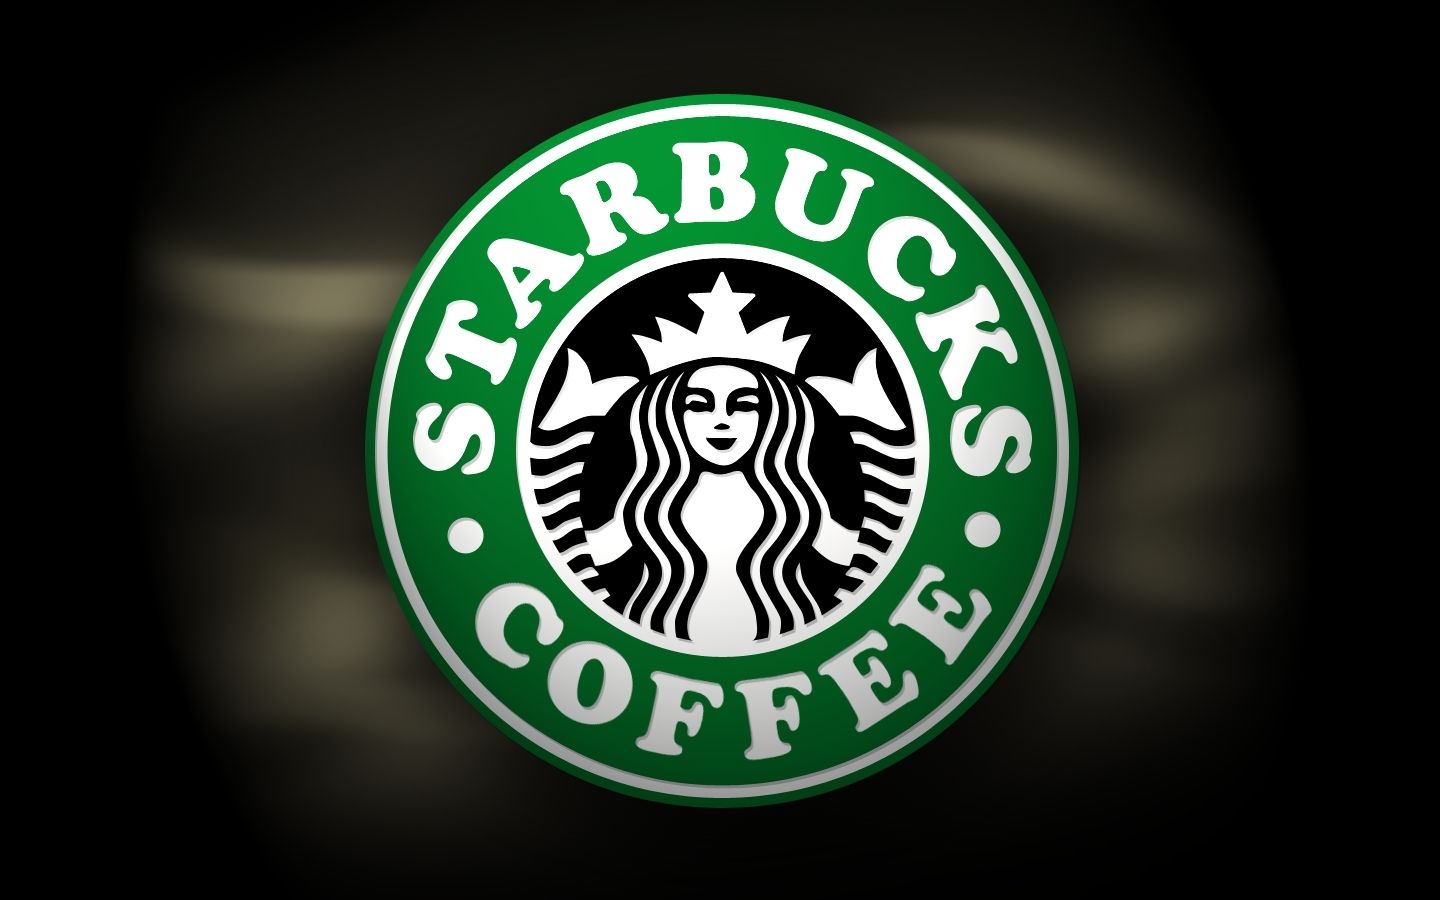 Starbucks Logo Wallpaper - Starbucks Wallpaper (3208054) - Fanpop